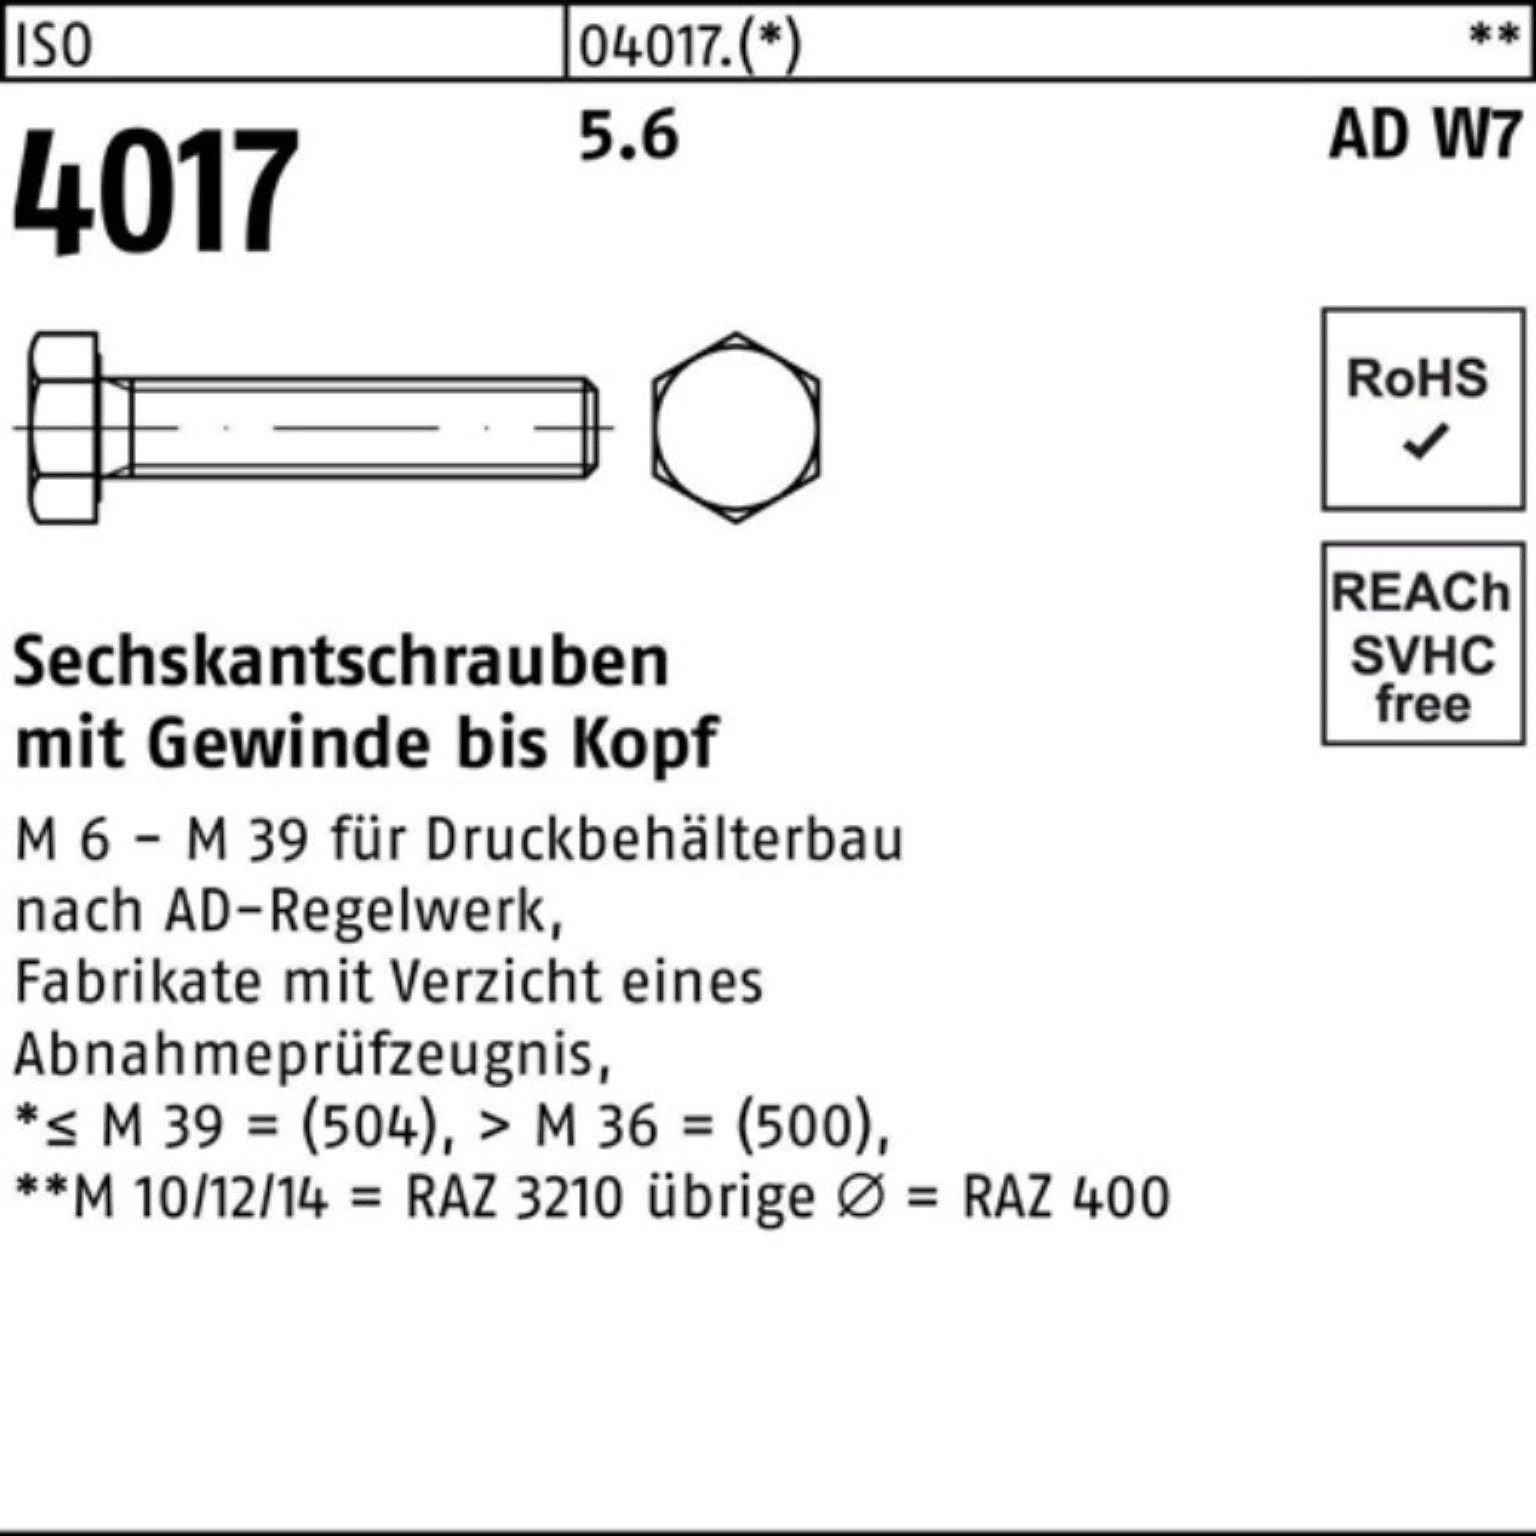 Bufab Sechskantschraube 200er Pack Sechskantschraube ISO 4017 VG M10x 25 5.6 AD W7 200 Stück